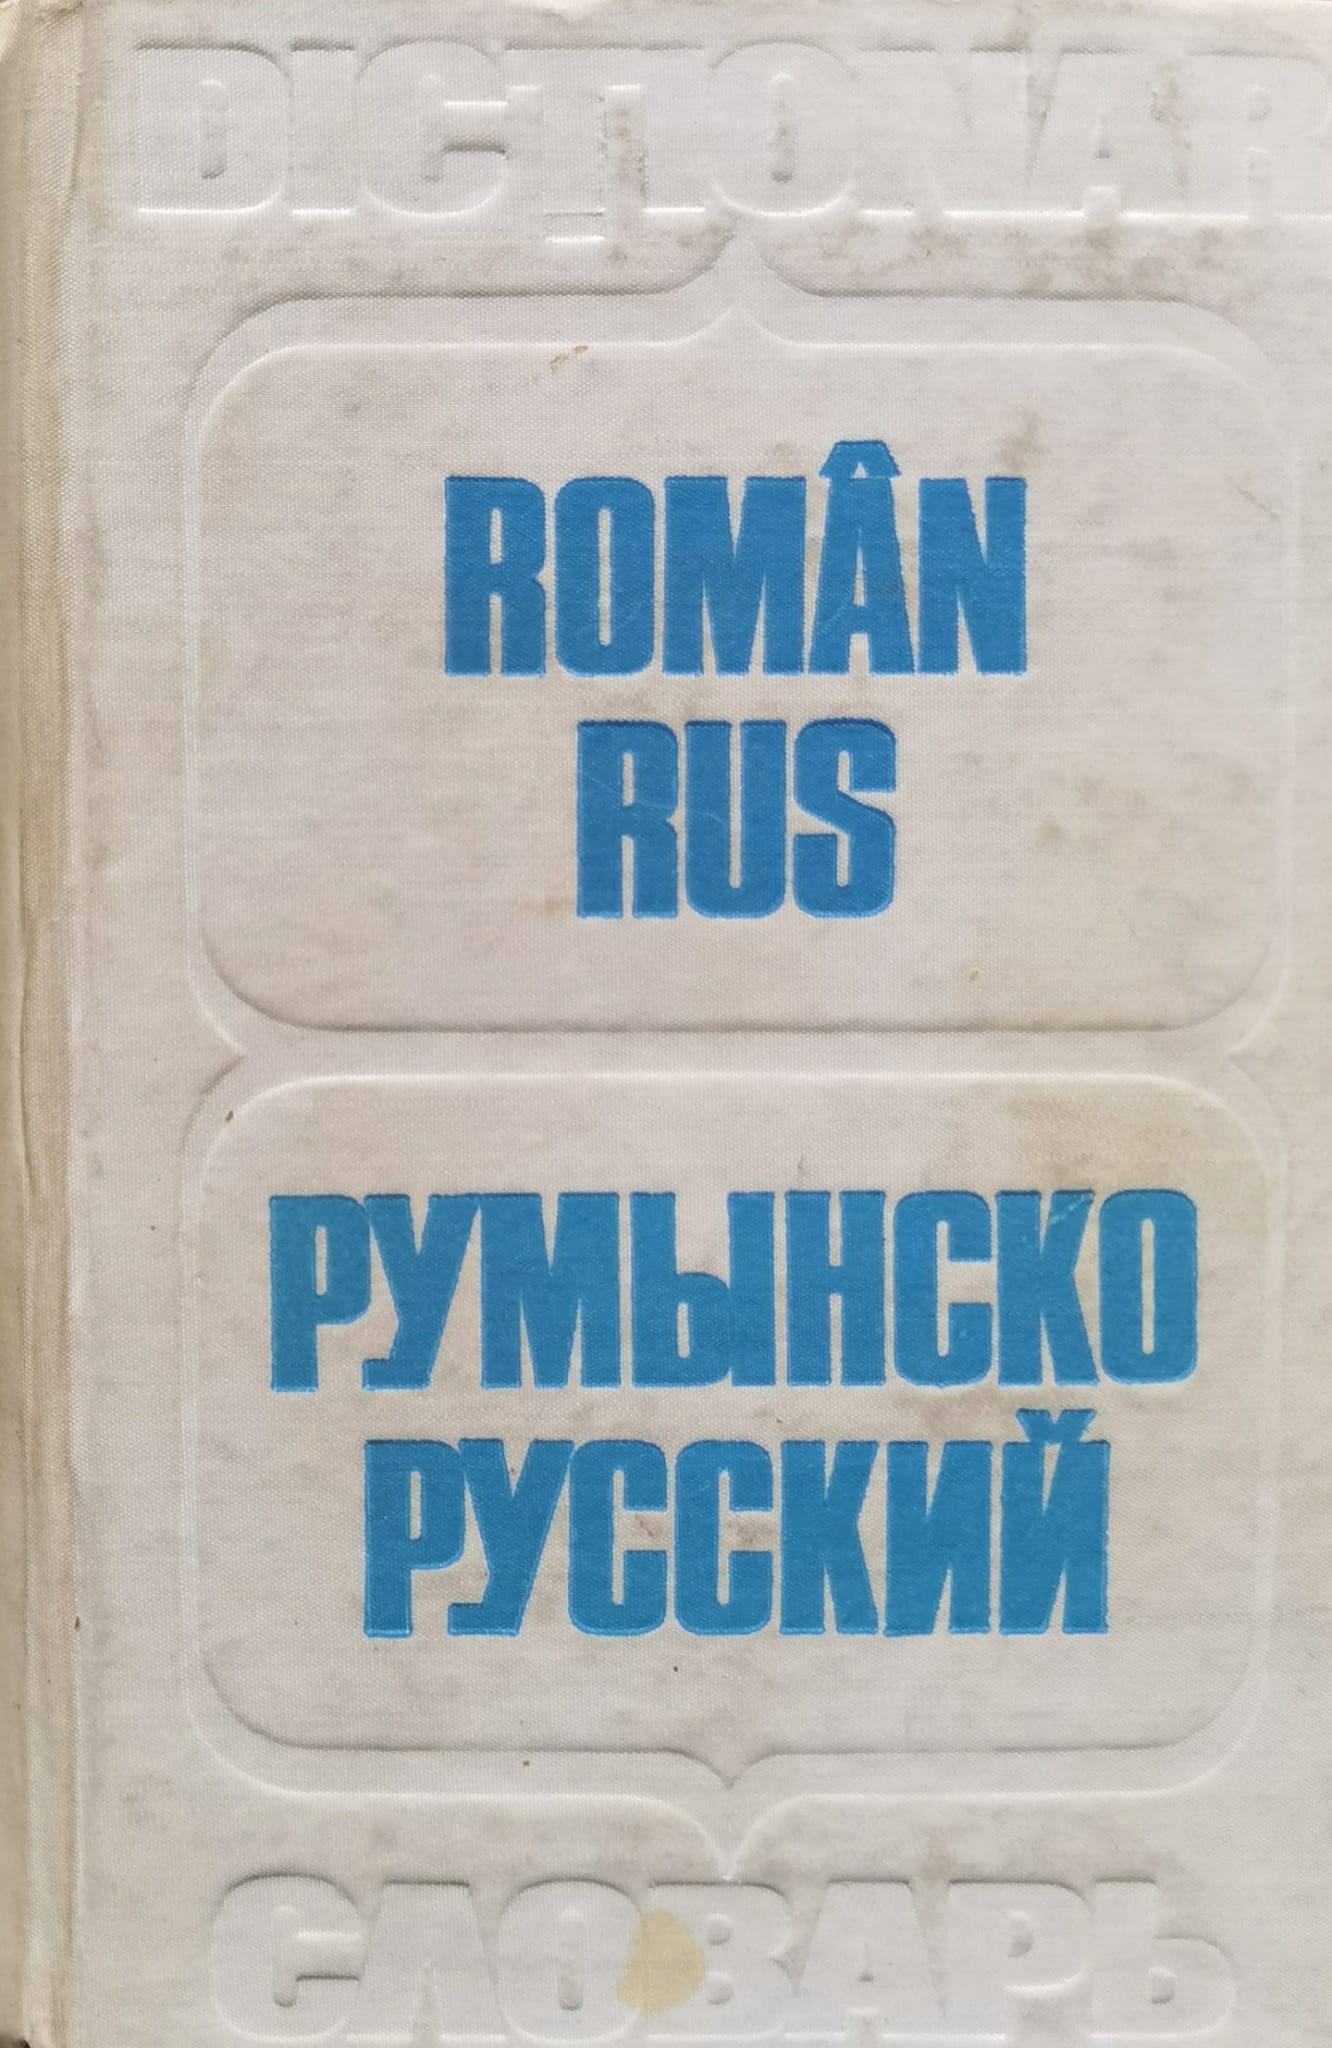 dictionar roman-rus                                                                                  gh.bolocan t. medvedev t. vorontova                                                                 